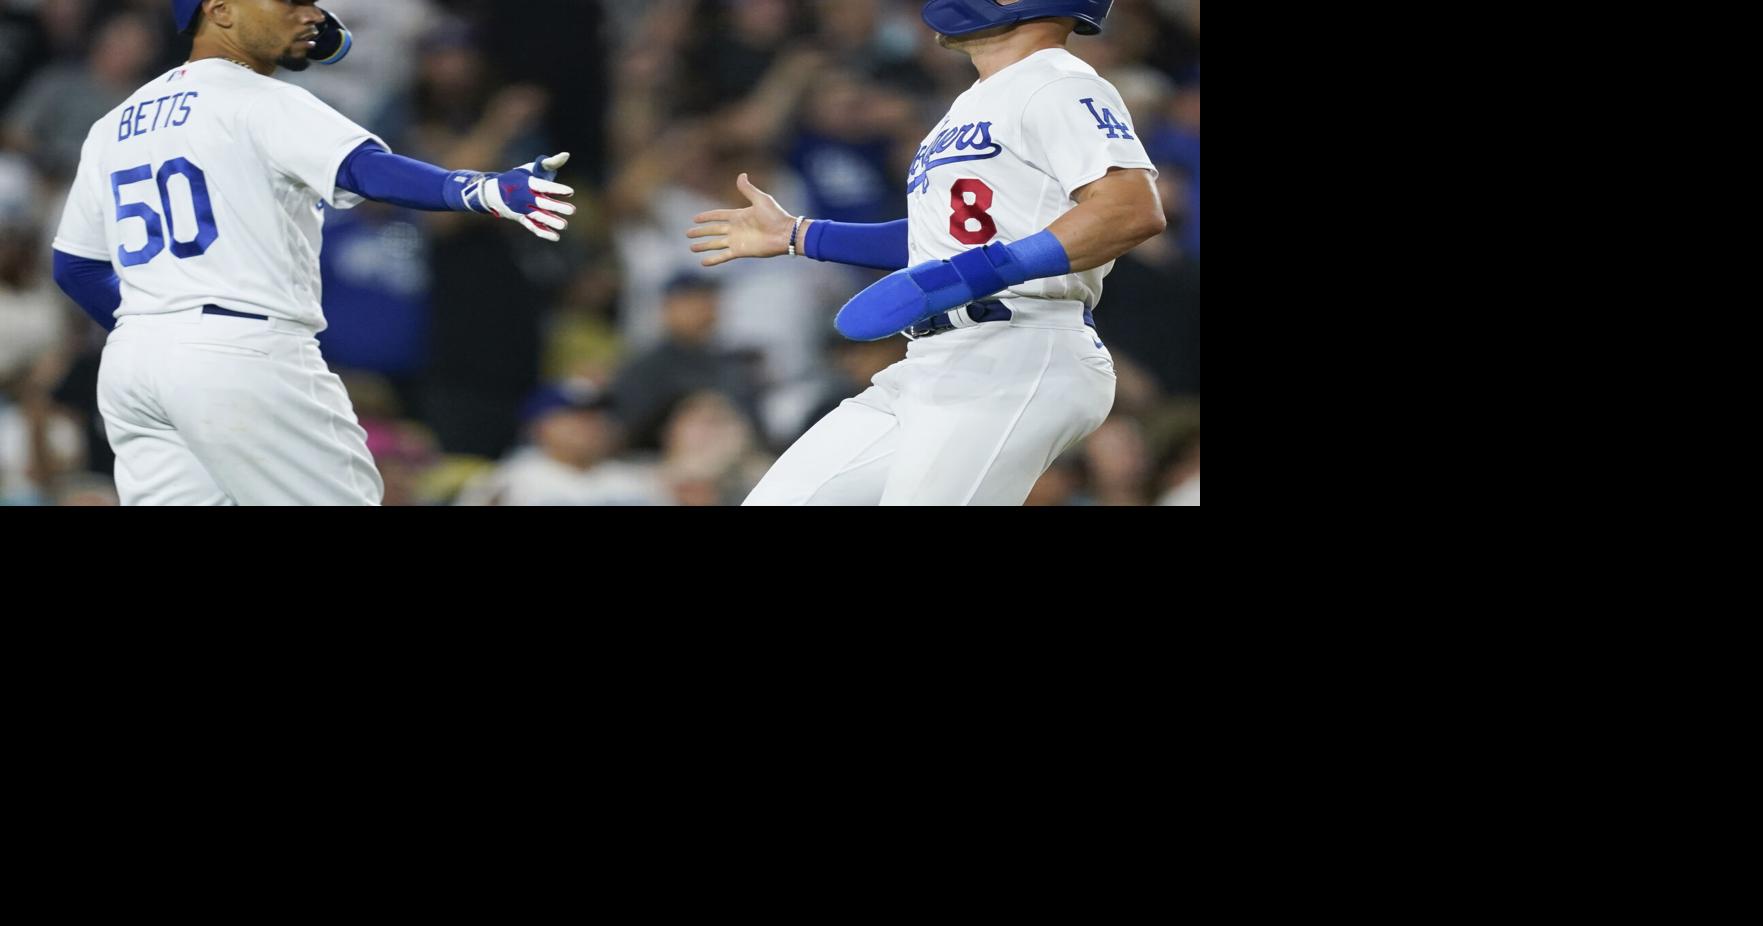 LITTLE LEAGUE BASEBALL: Rockies defeat Dodgers to win BD single A